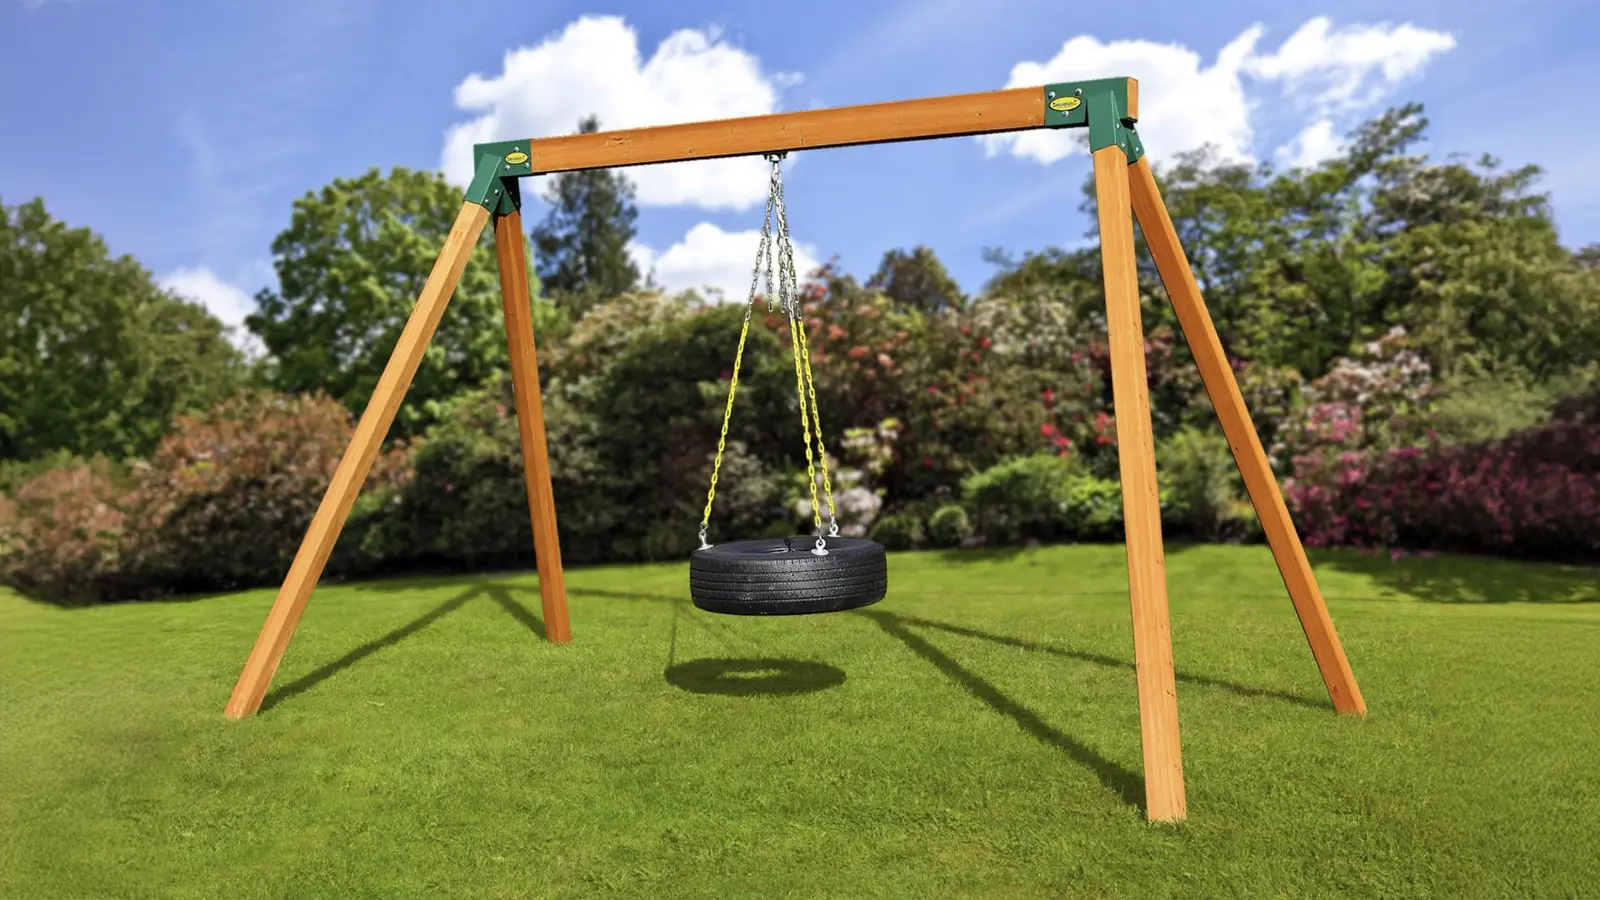 Choosing the Right Swing Set